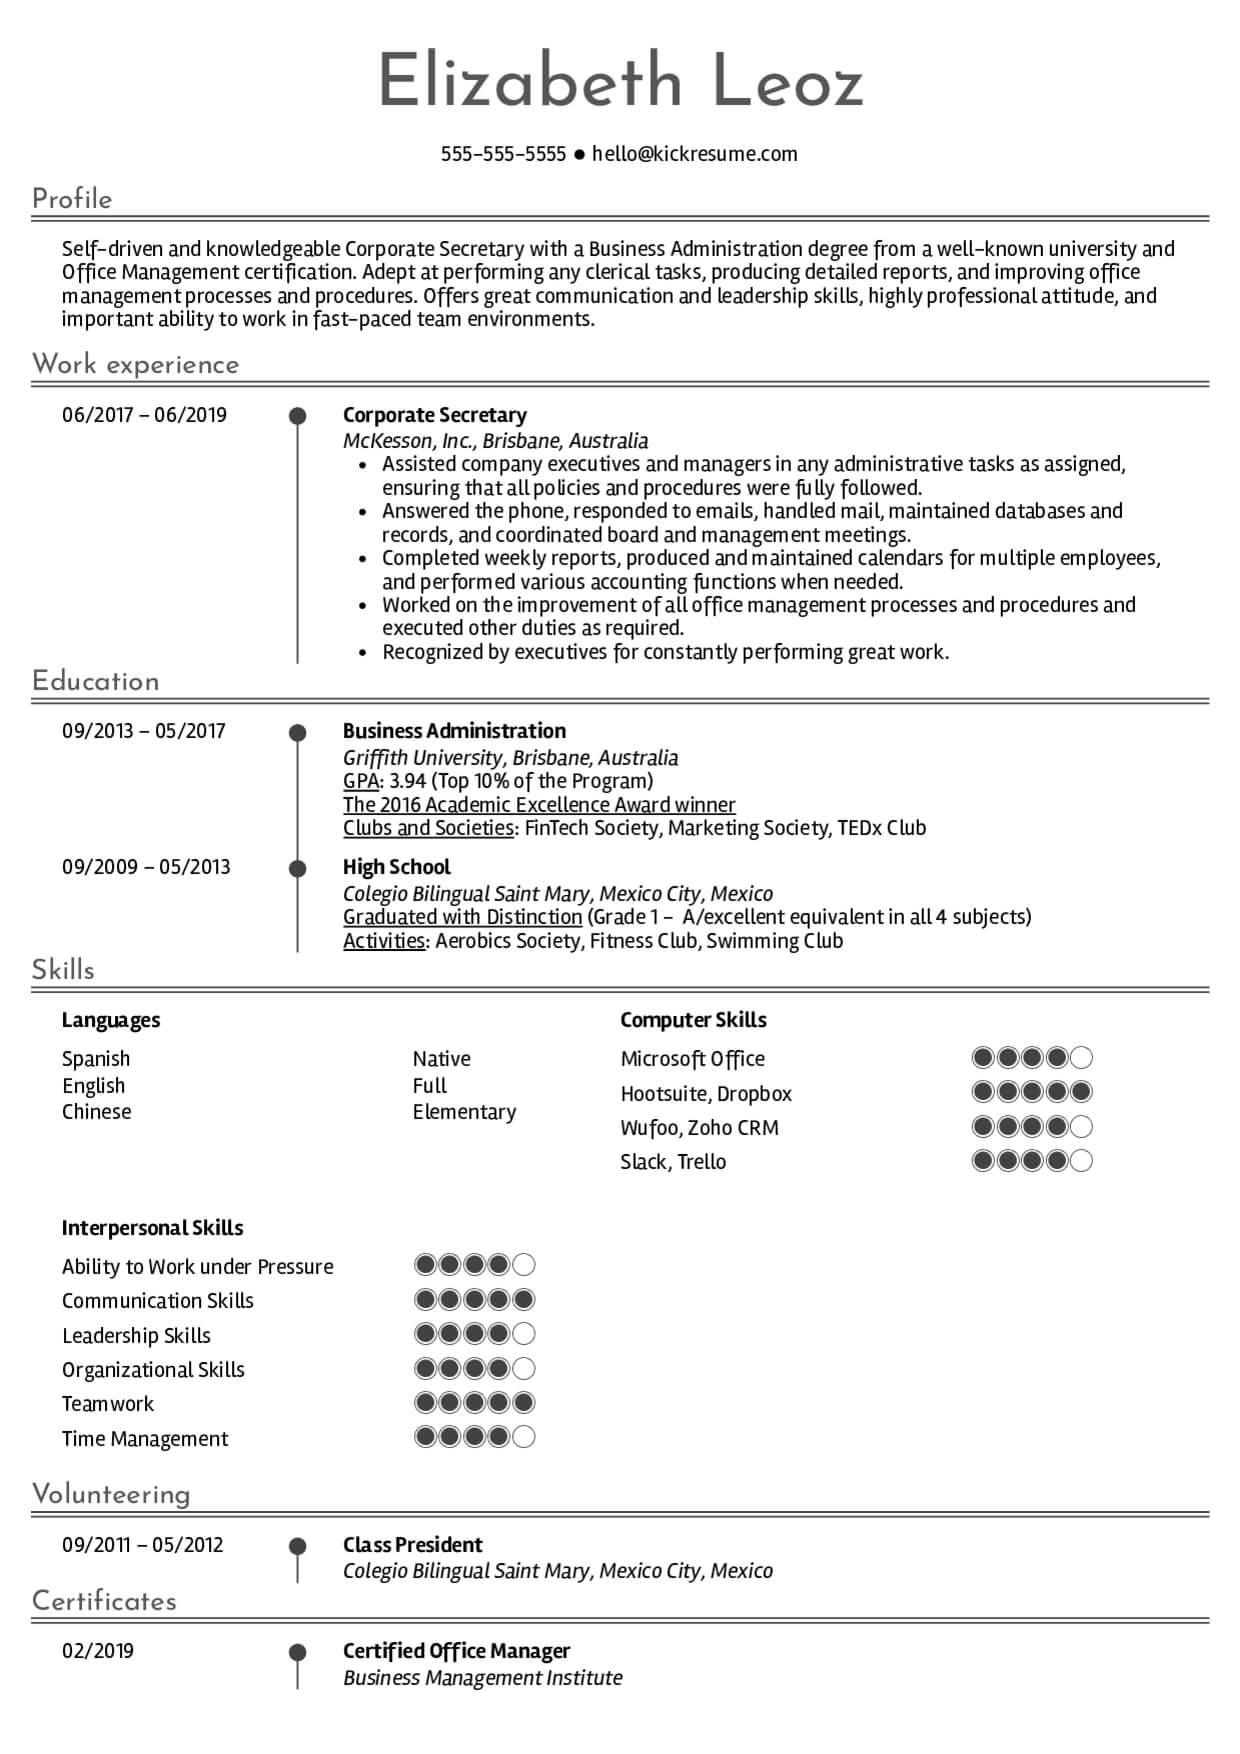 Resume Examplesreal People: Corporate Secretary Resume Intended For Corporate Secretary Certificate Template